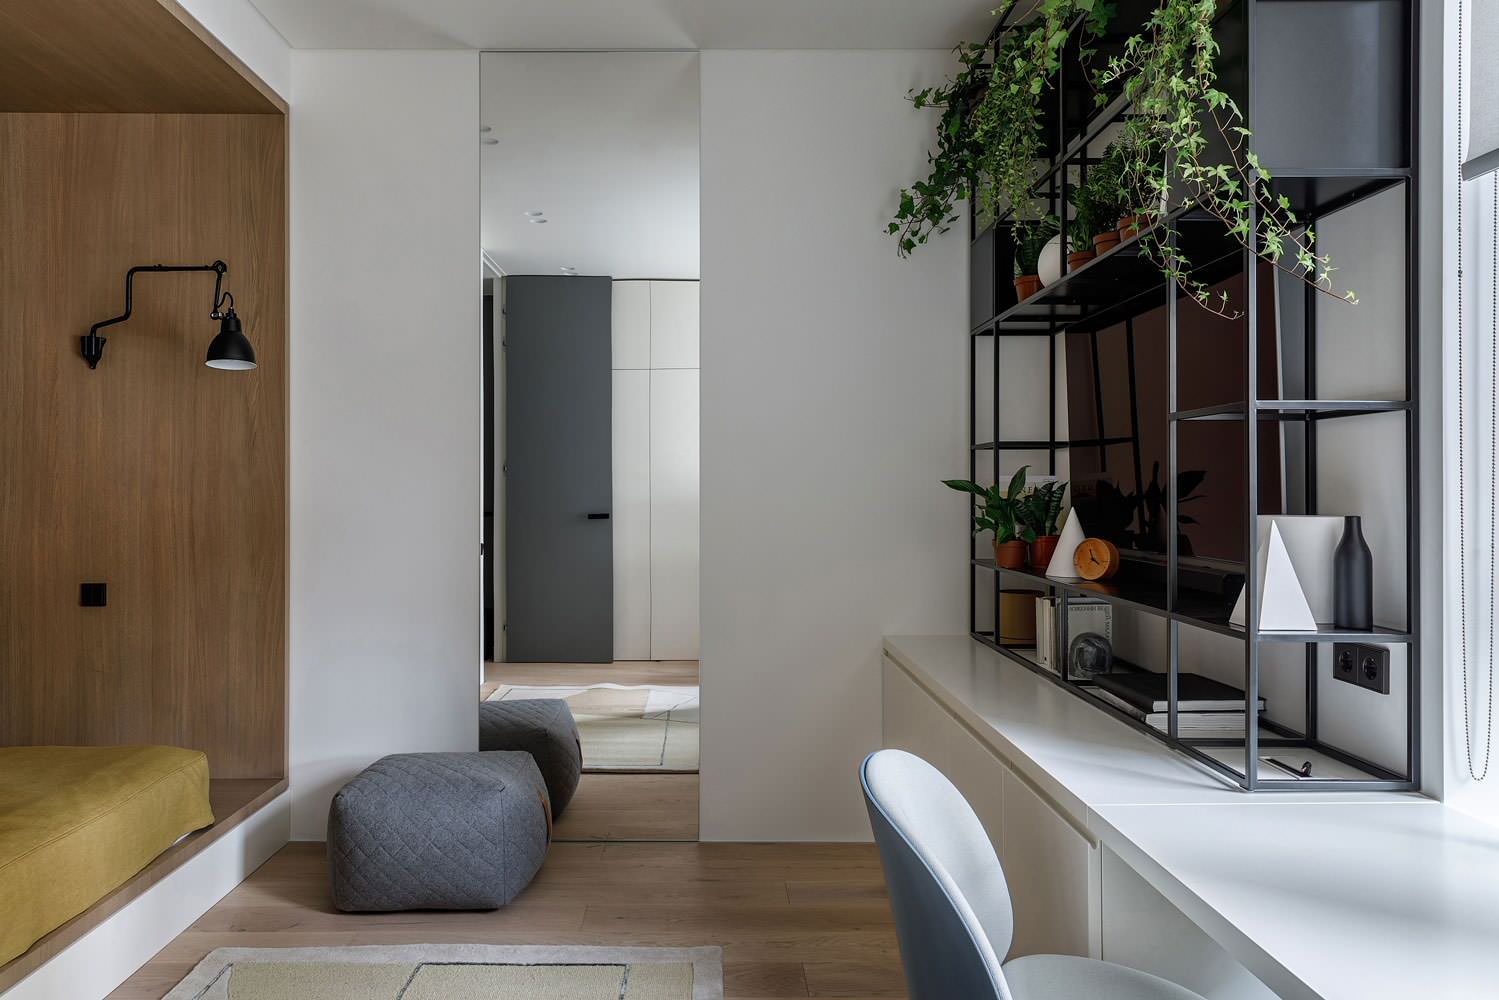 Элегантный интерьер квартиры в стиле современная классика